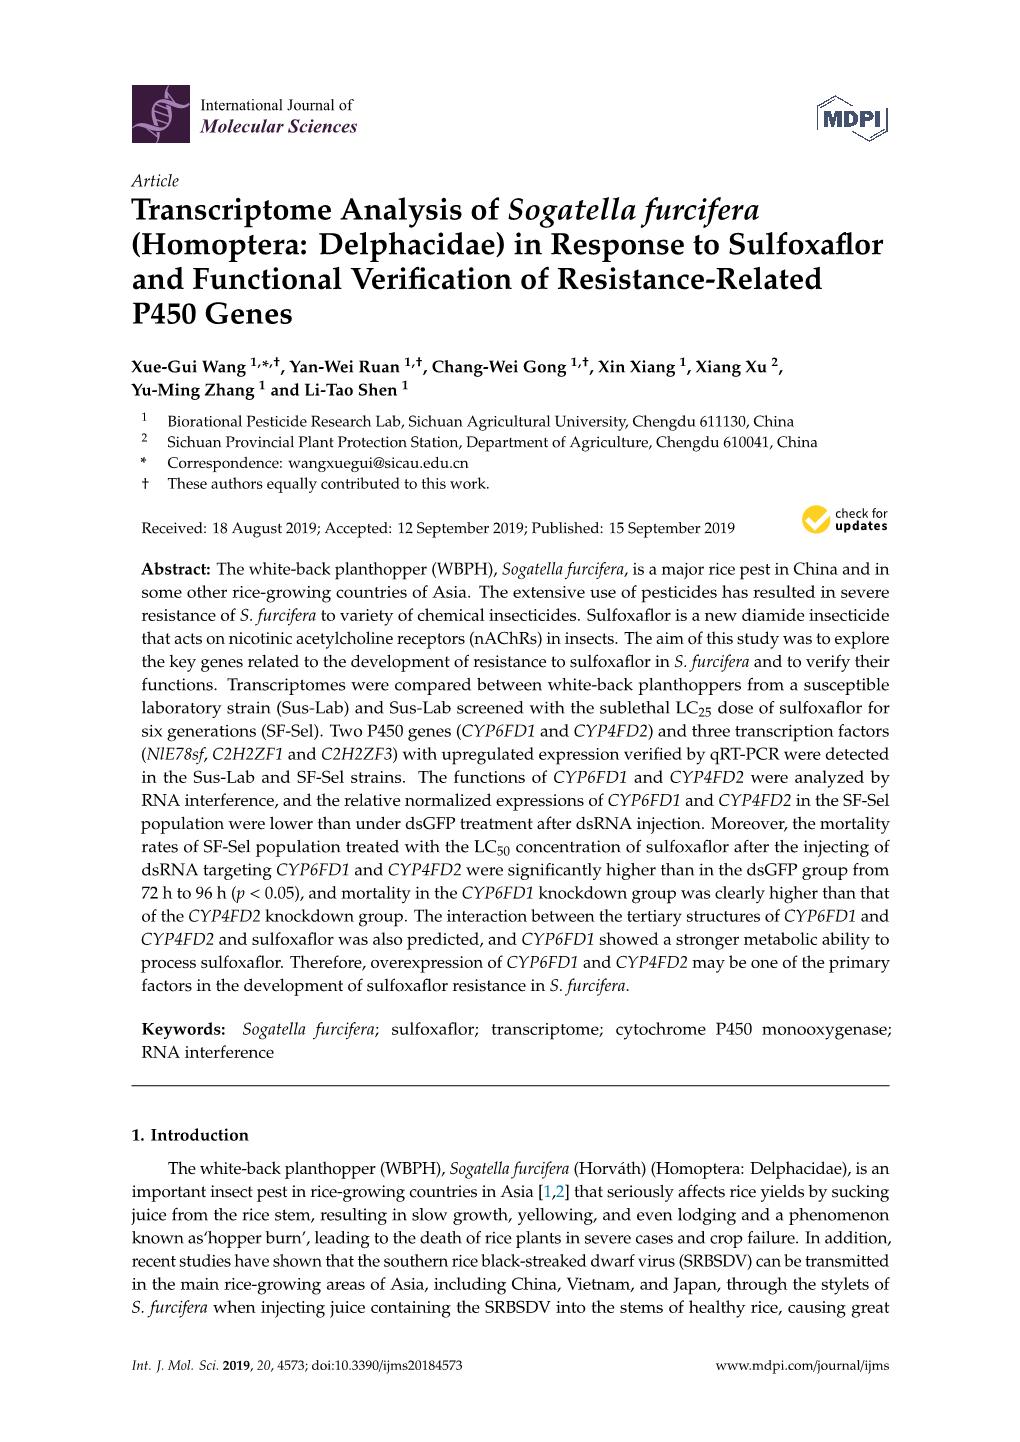 Transcriptome Analysis of Sogatella Furcifera (Homoptera: Delphacidae) in Response to Sulfoxaﬂor and Functional Veriﬁcation of Resistance-Related P450 Genes